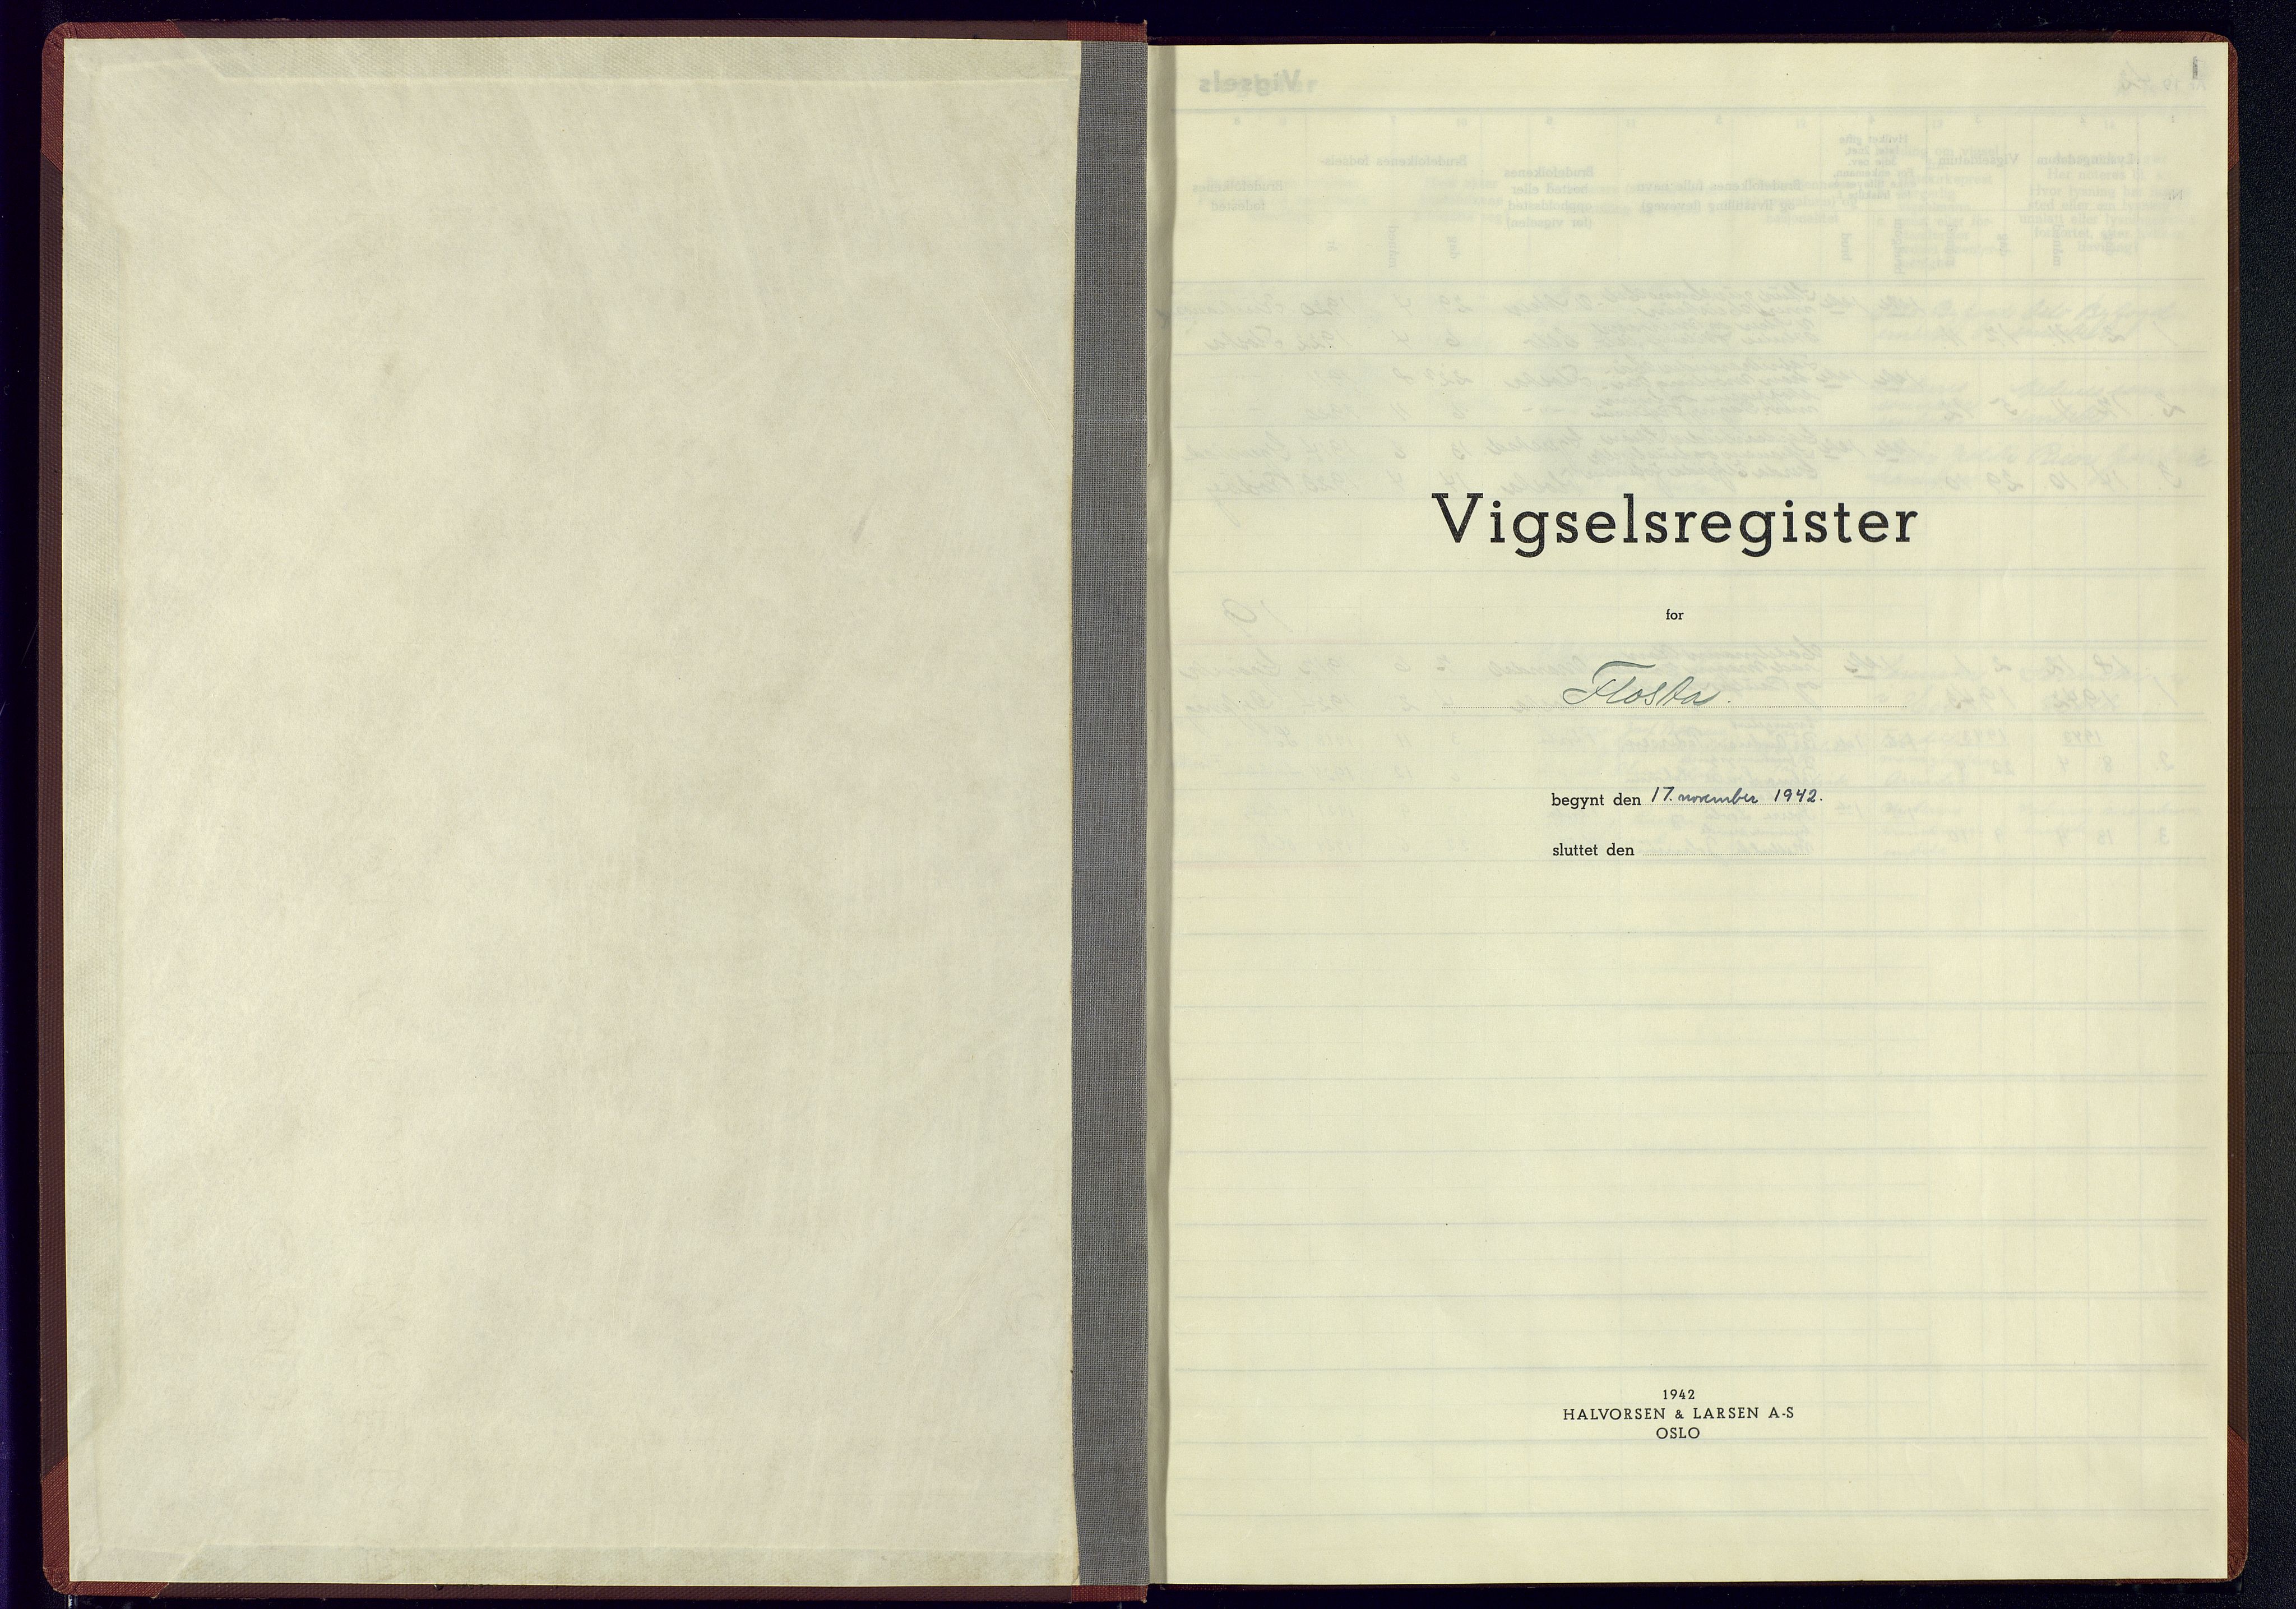 Austre Moland sokneprestkontor, SAK/1111-0001/J/Jb/L0008: Vigselsregister nr. A-VI-31, 1942-1944